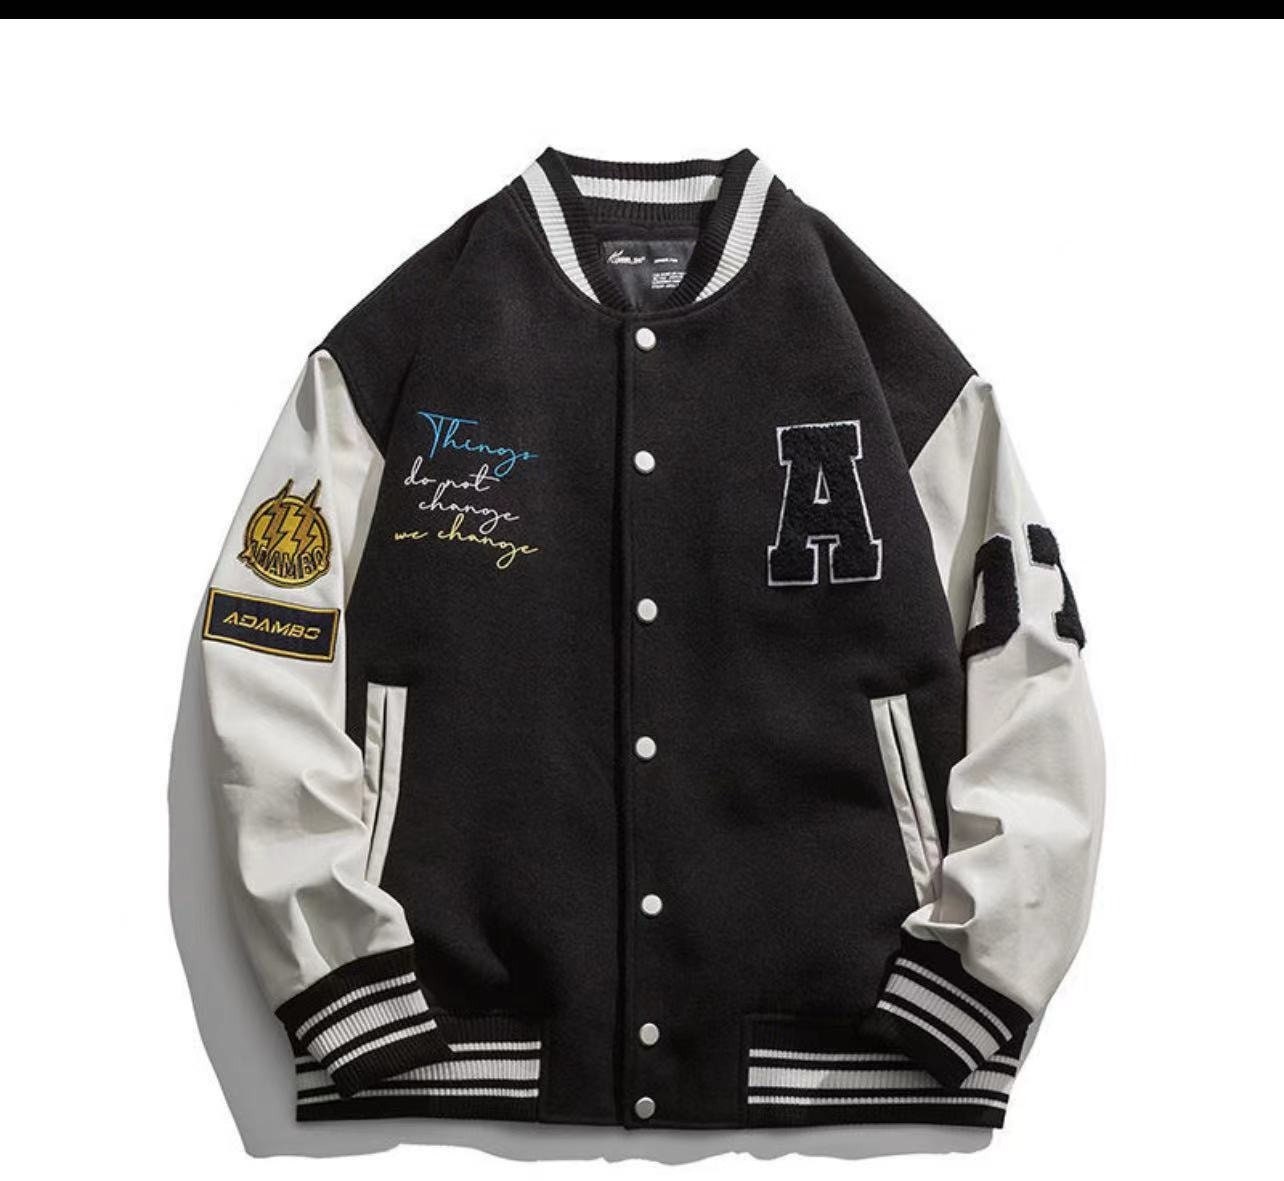 California Varsity Jacket, Unisex Baseball Jacket, Letterman Jacket,  Embroidered Button up College Top 